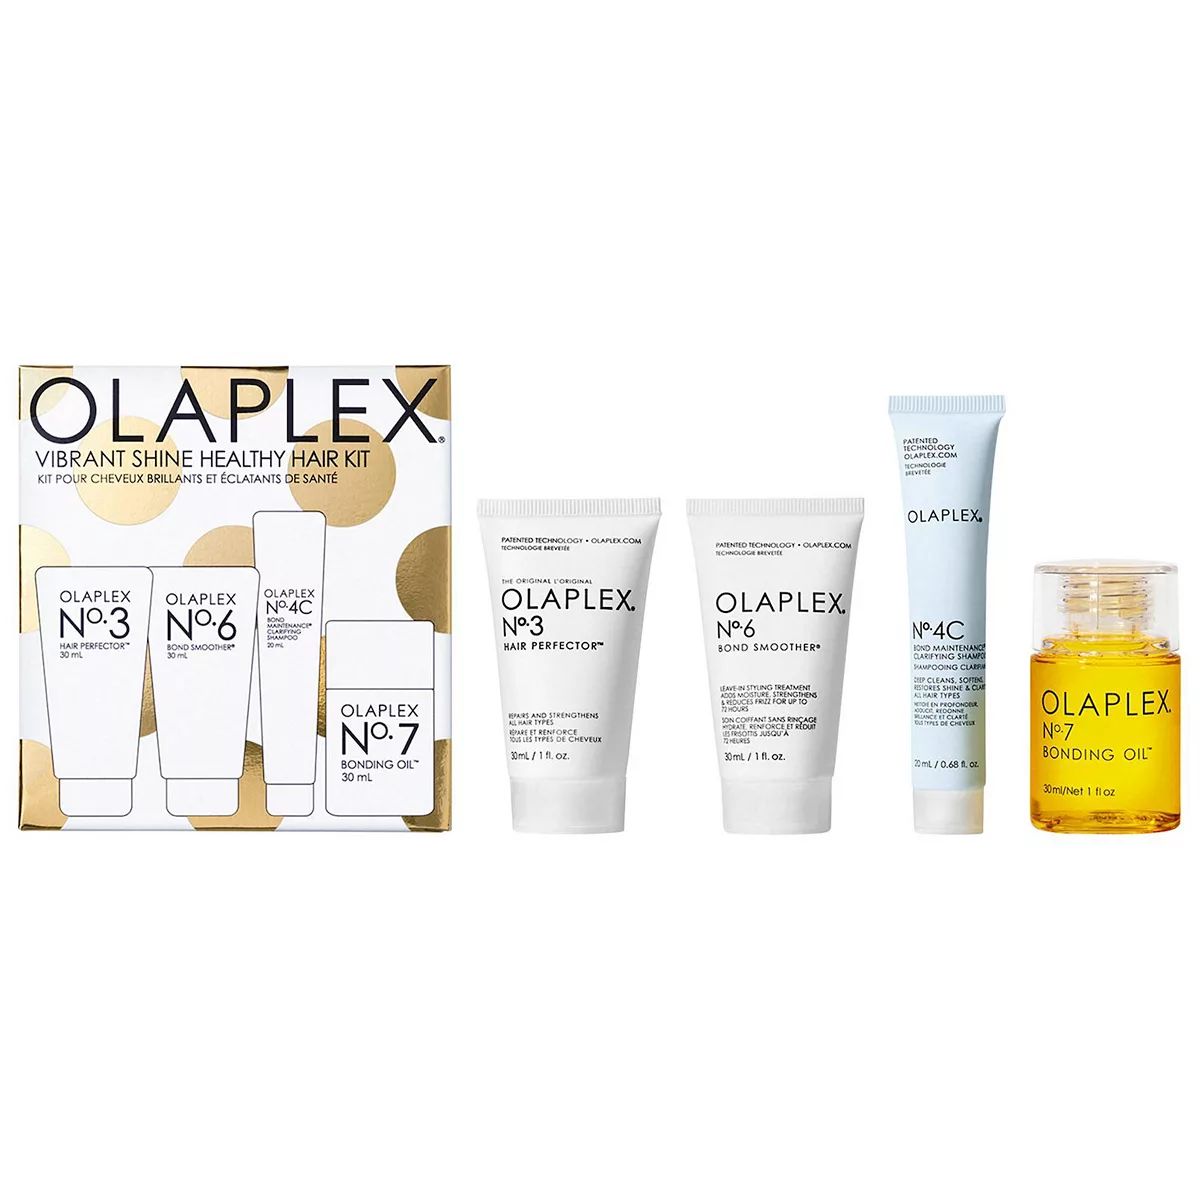 Olaplex Vibrant Shine Healthy Hair Kit | Kohl's